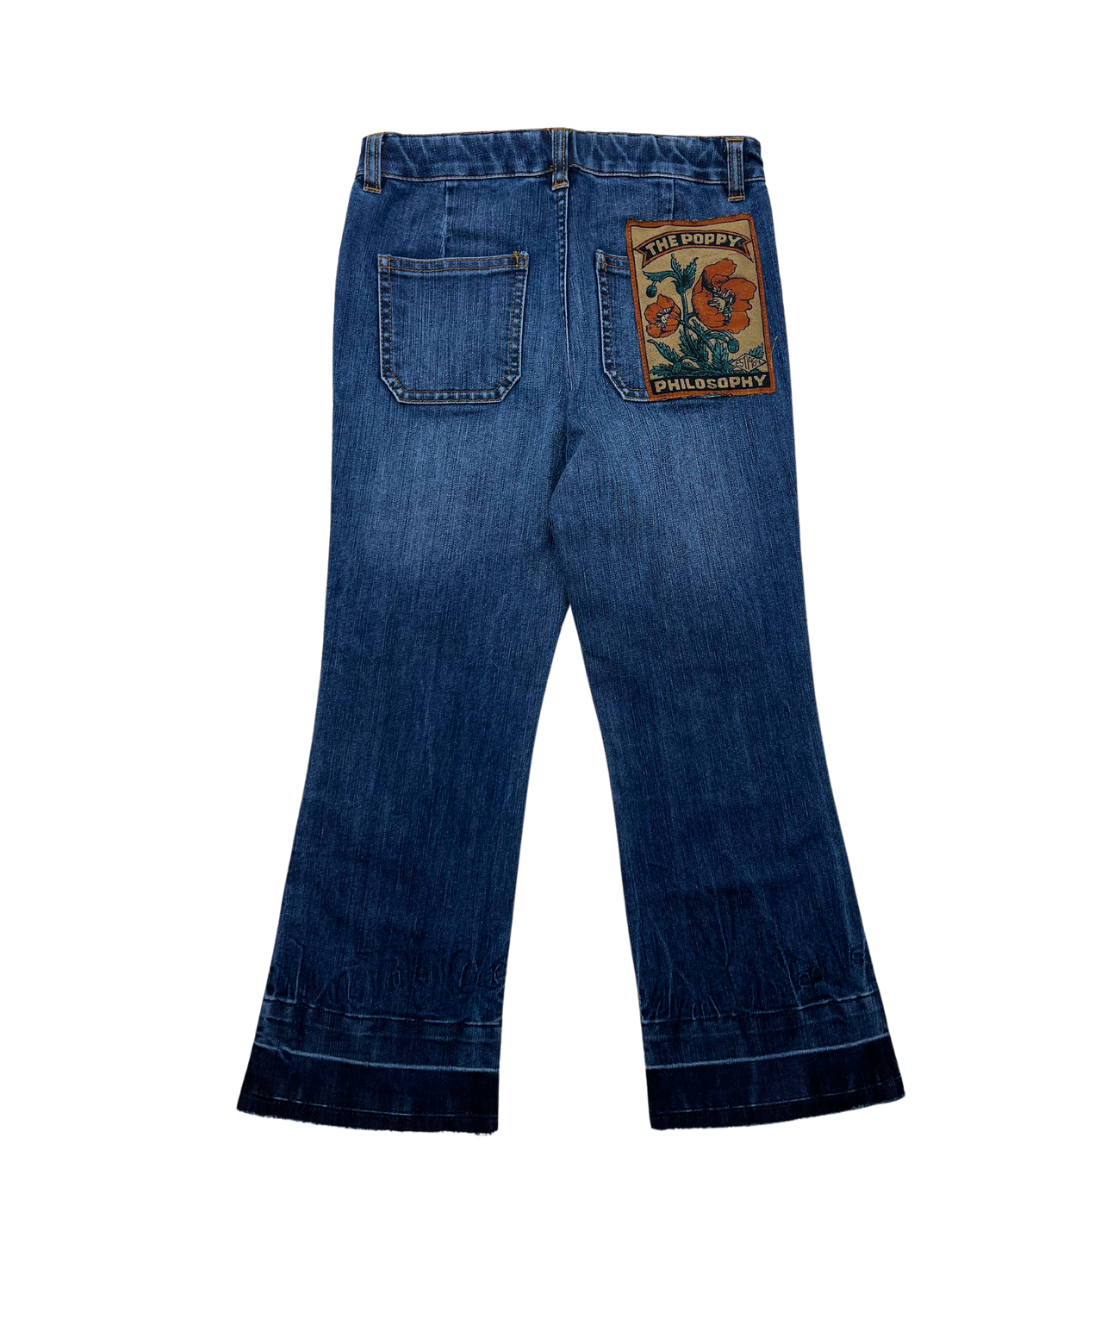 PHILOSOPHY DI LORENZO - Star jeans - 8 years old